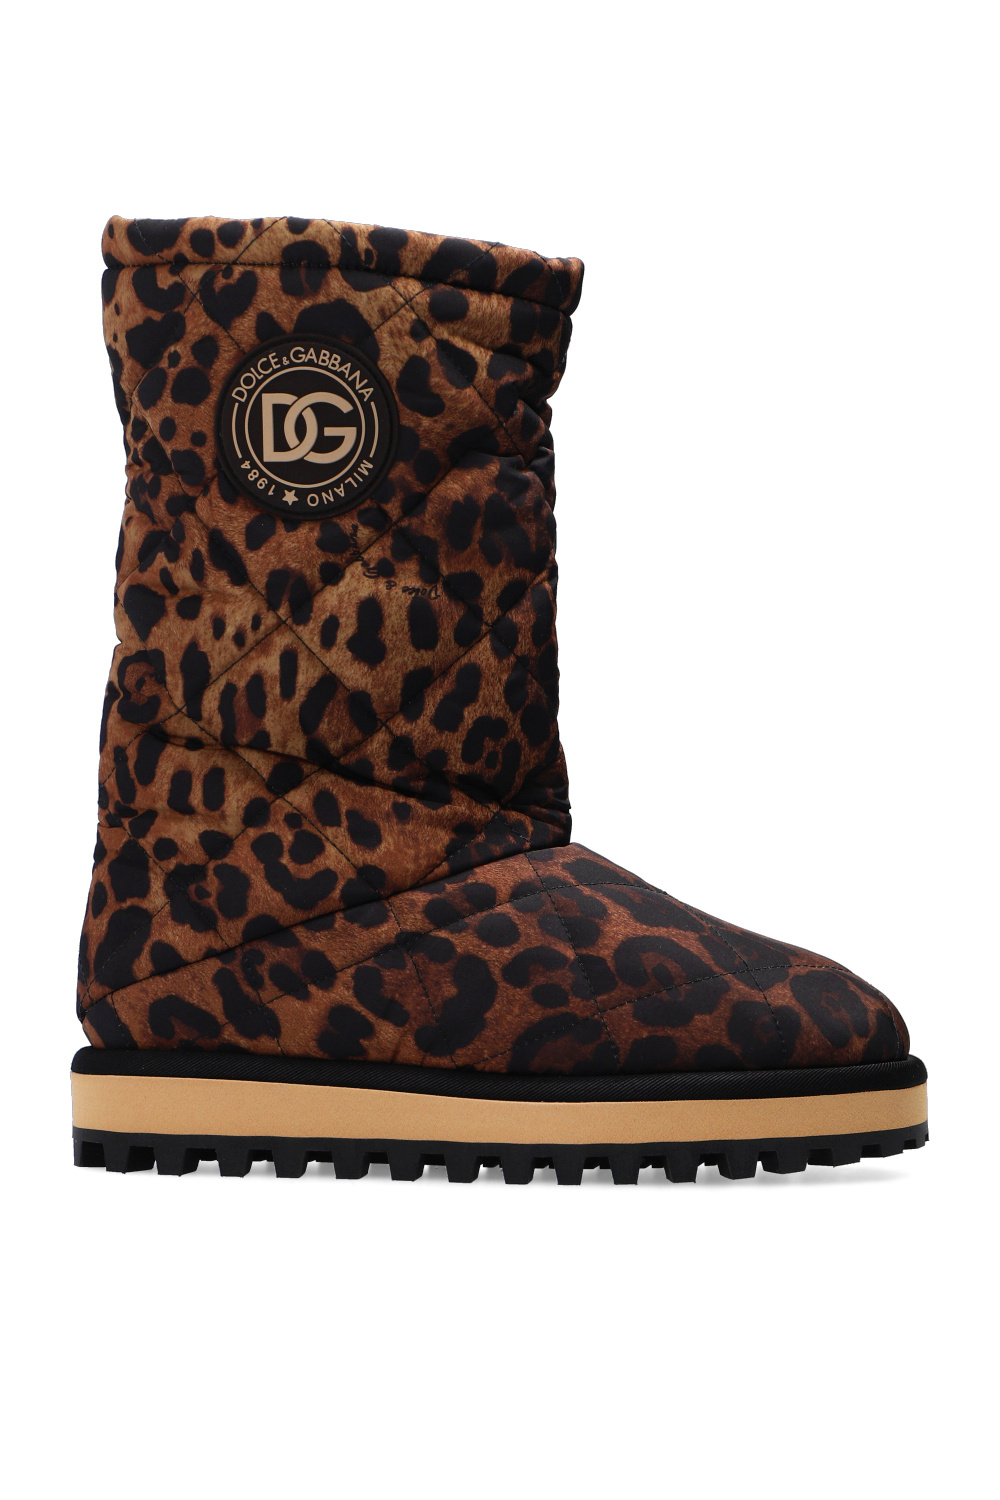 Dolce & Gabbana Waterproof snow sneakers